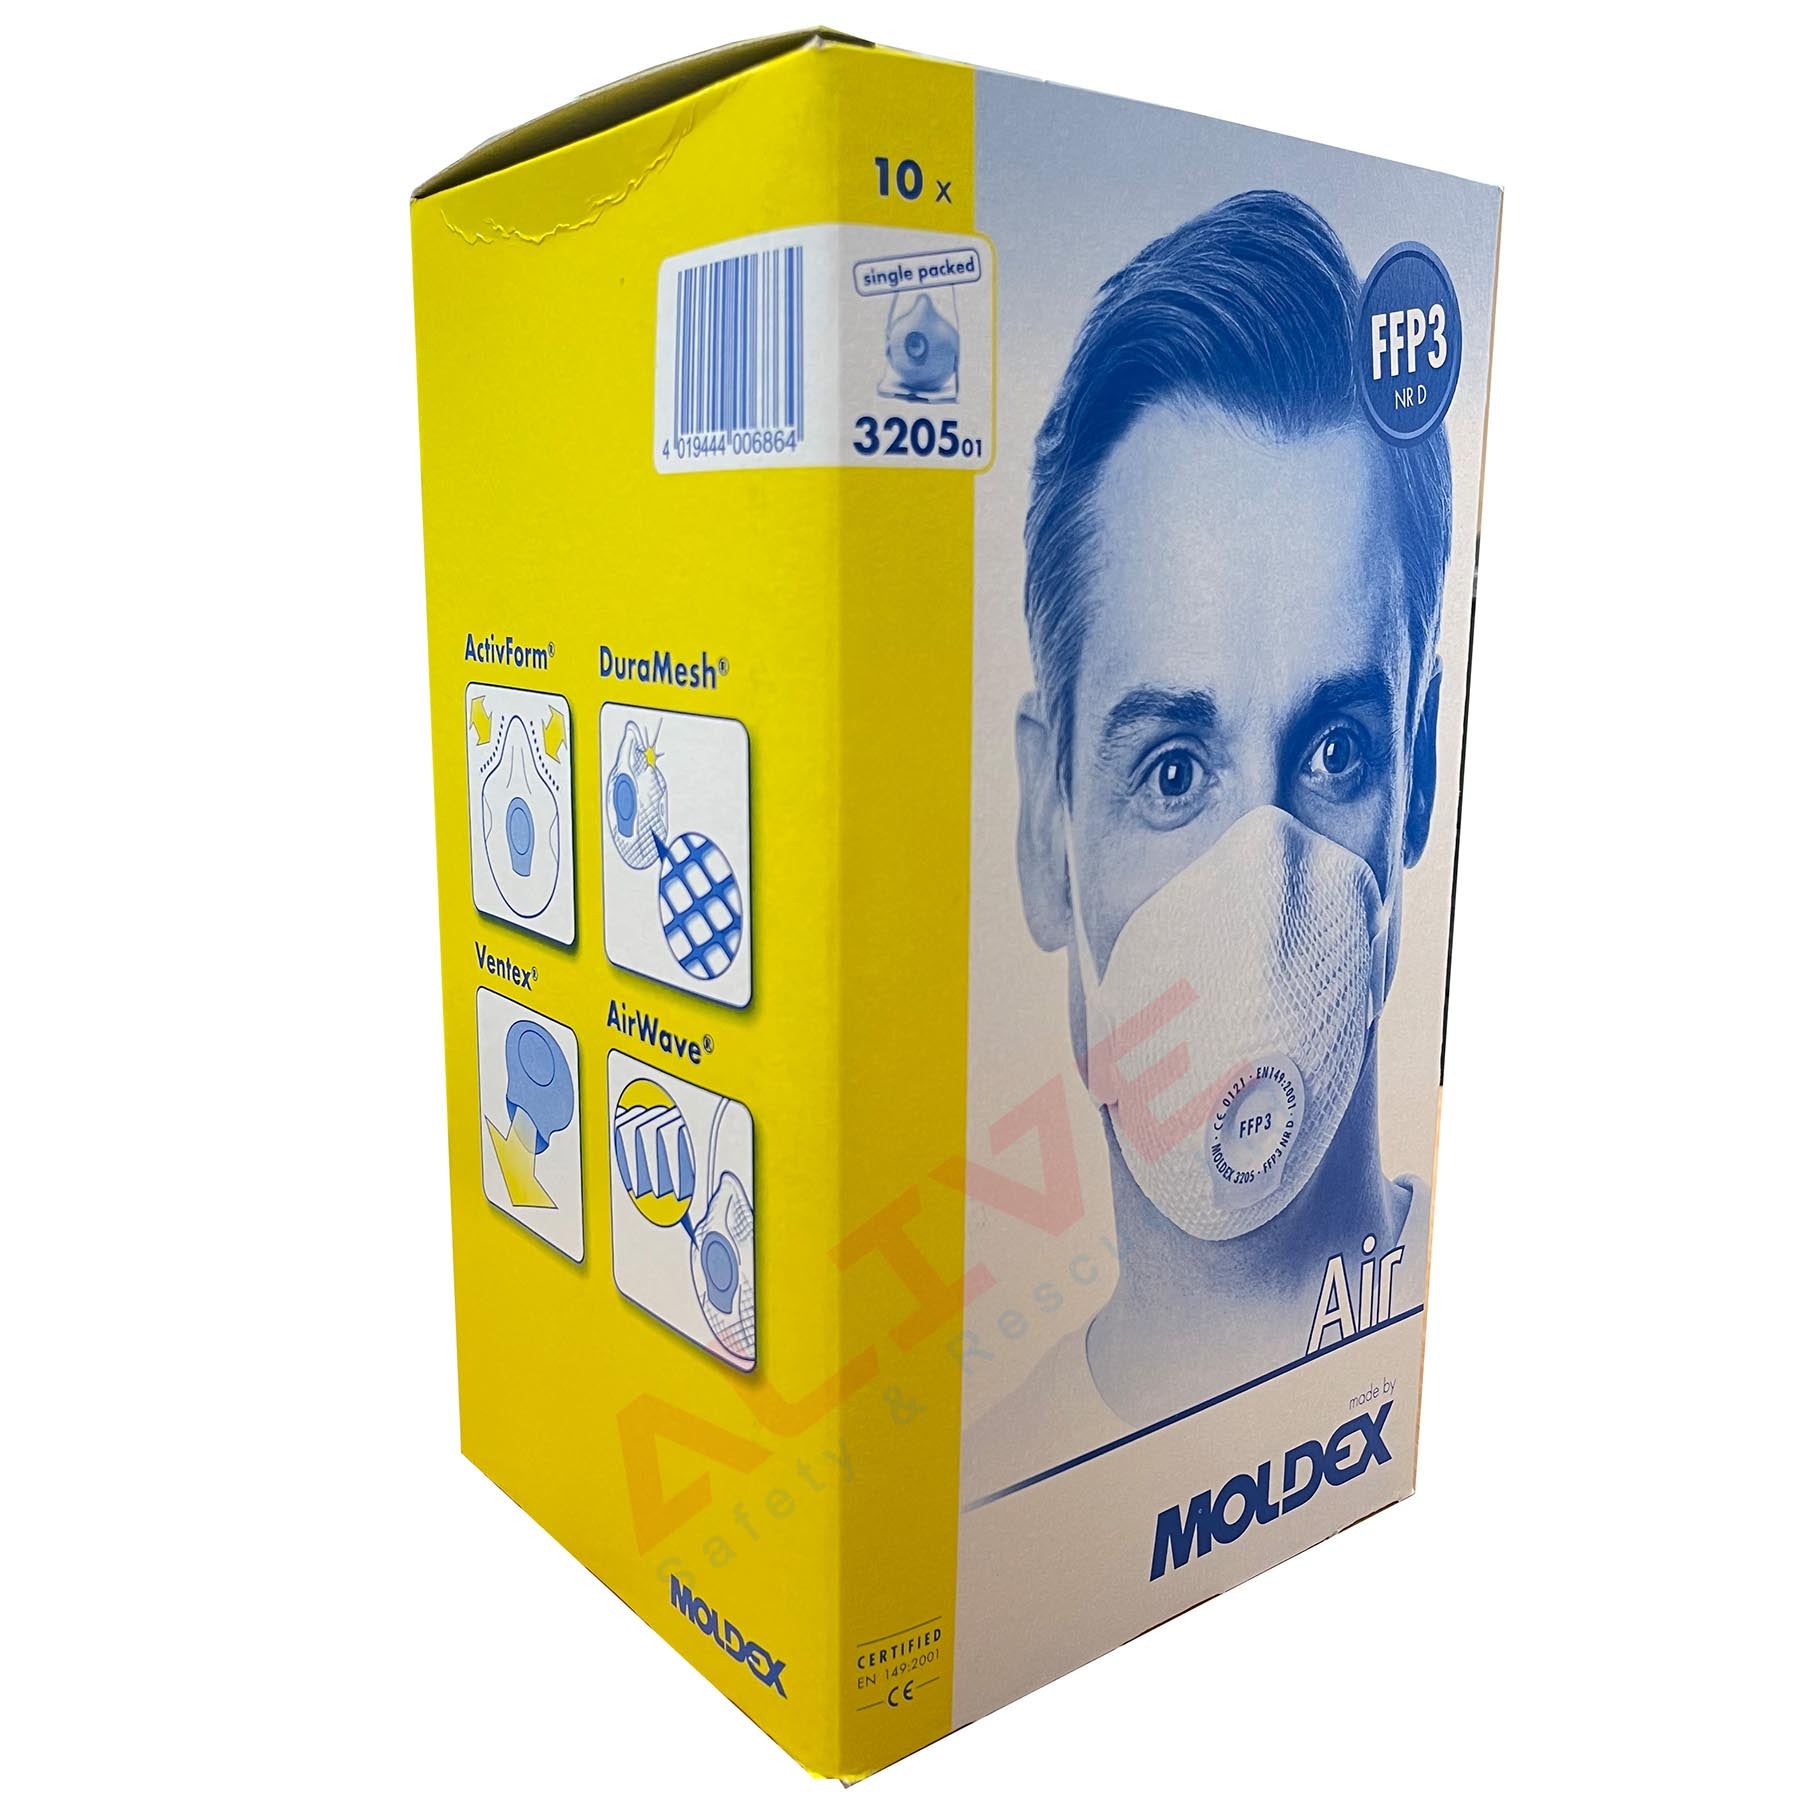 Moldex 3205 FFP3 Air NR D Masks Box of 10